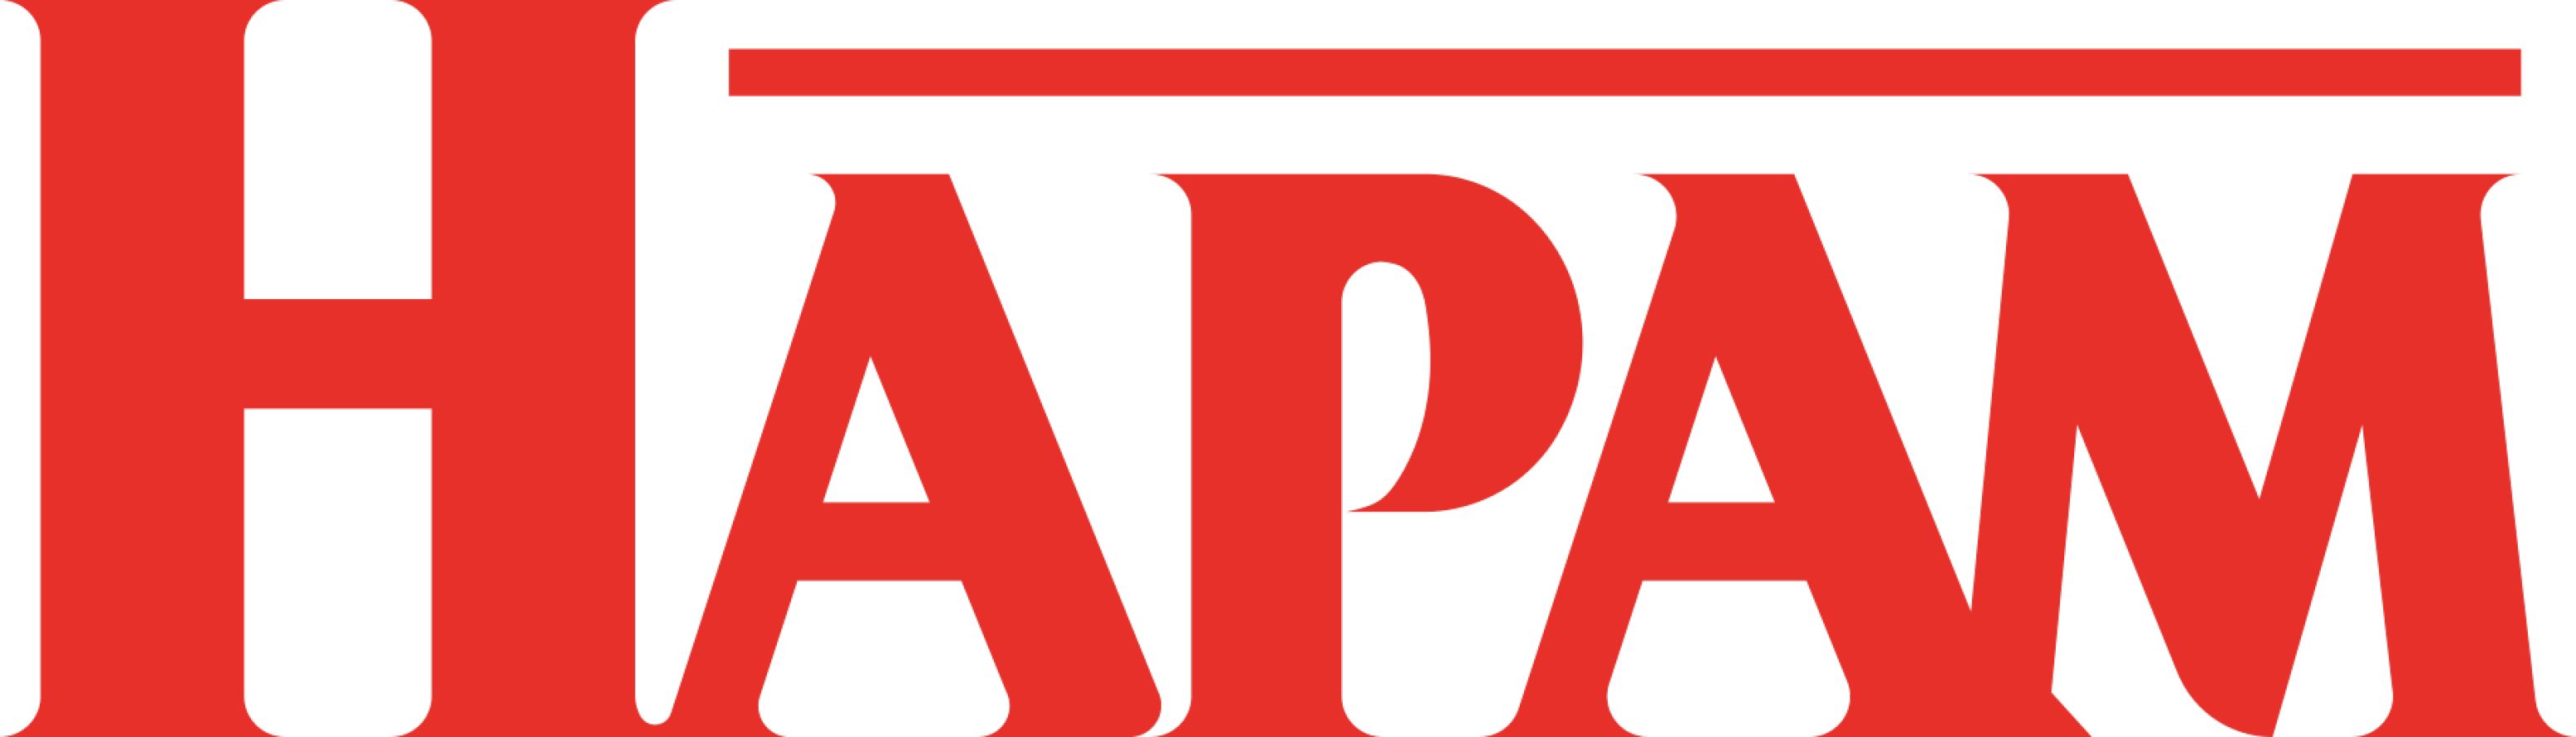 Hapam logo pms 032